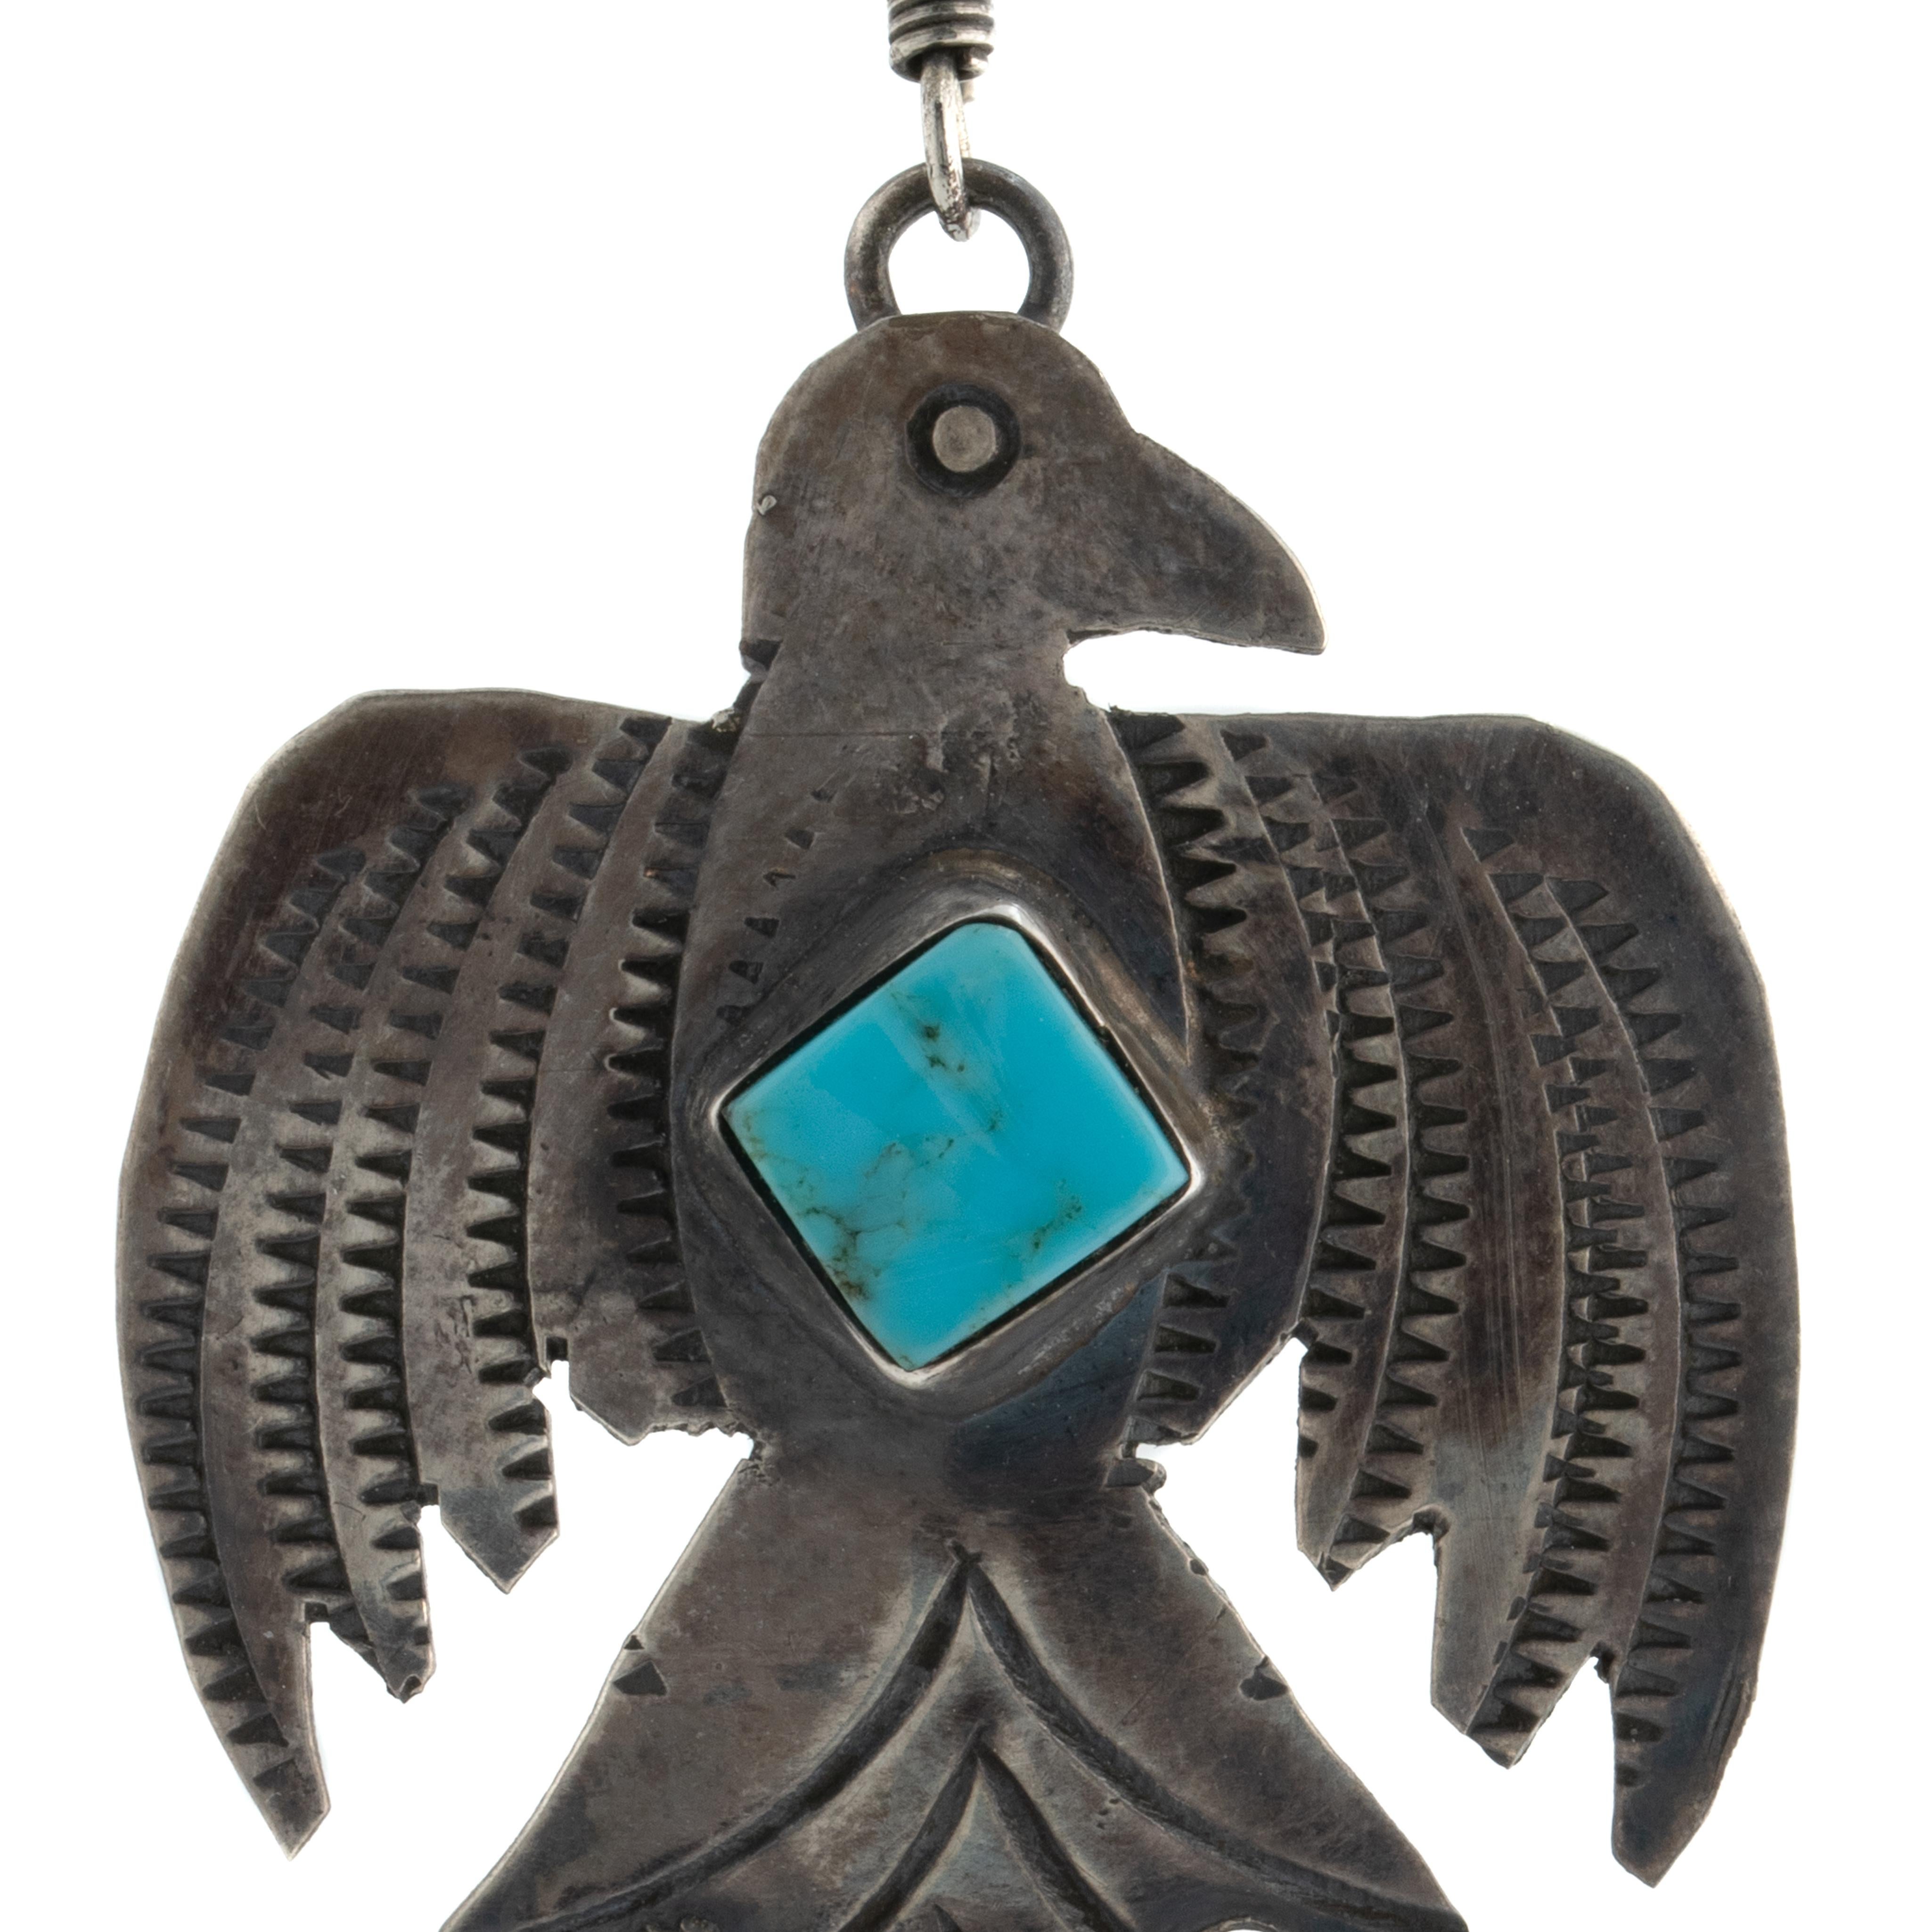 Vintage Native American Navajo Silber und Türkis Thunderbird Ohrringe c.1970s

Länge: 2,45